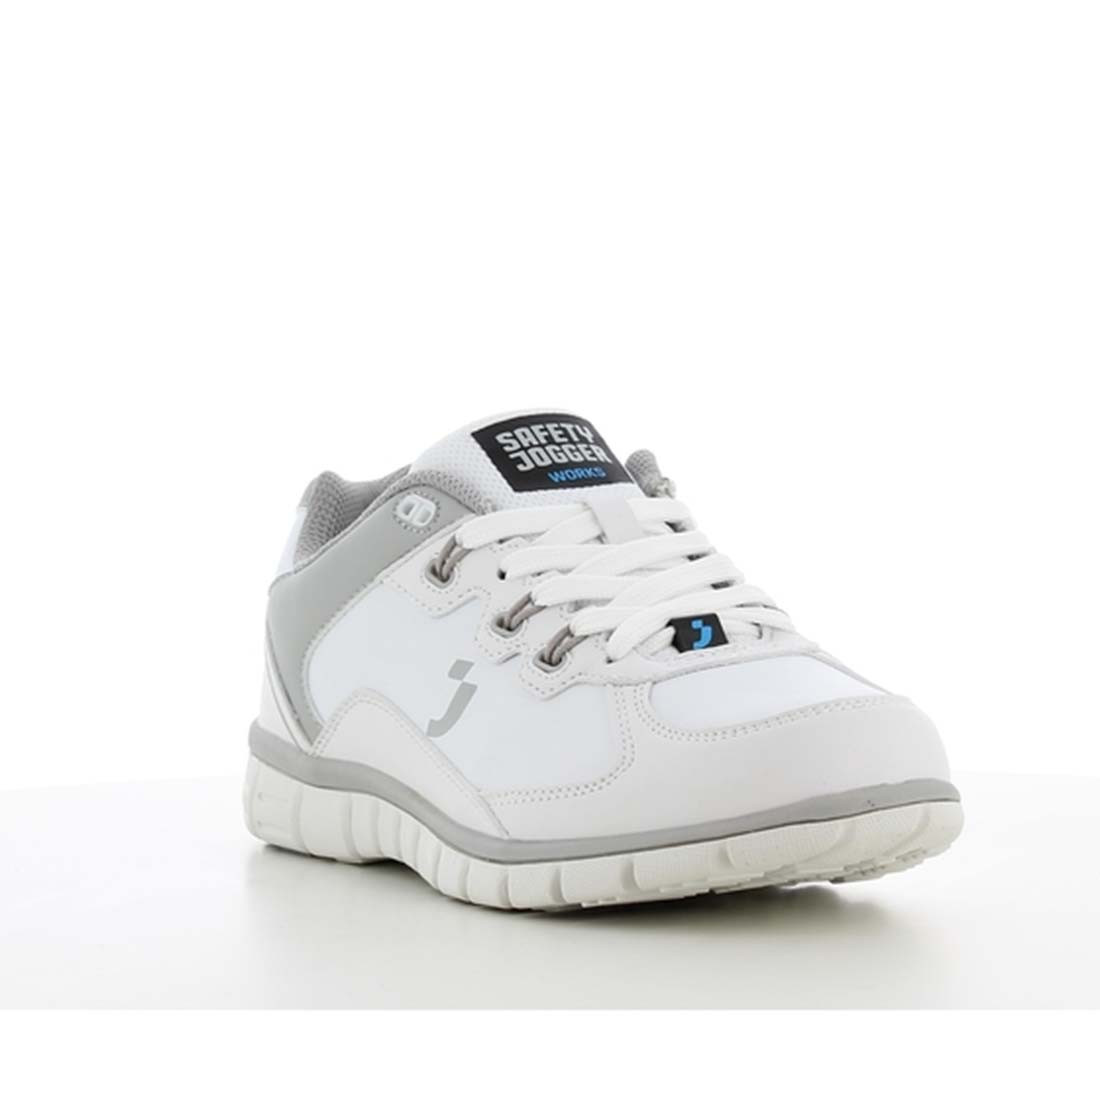 Adidasi sport dama SUNNY OB - Incaltaminte de protectie | Bocanci, Pantofi, Sandale, Cizme